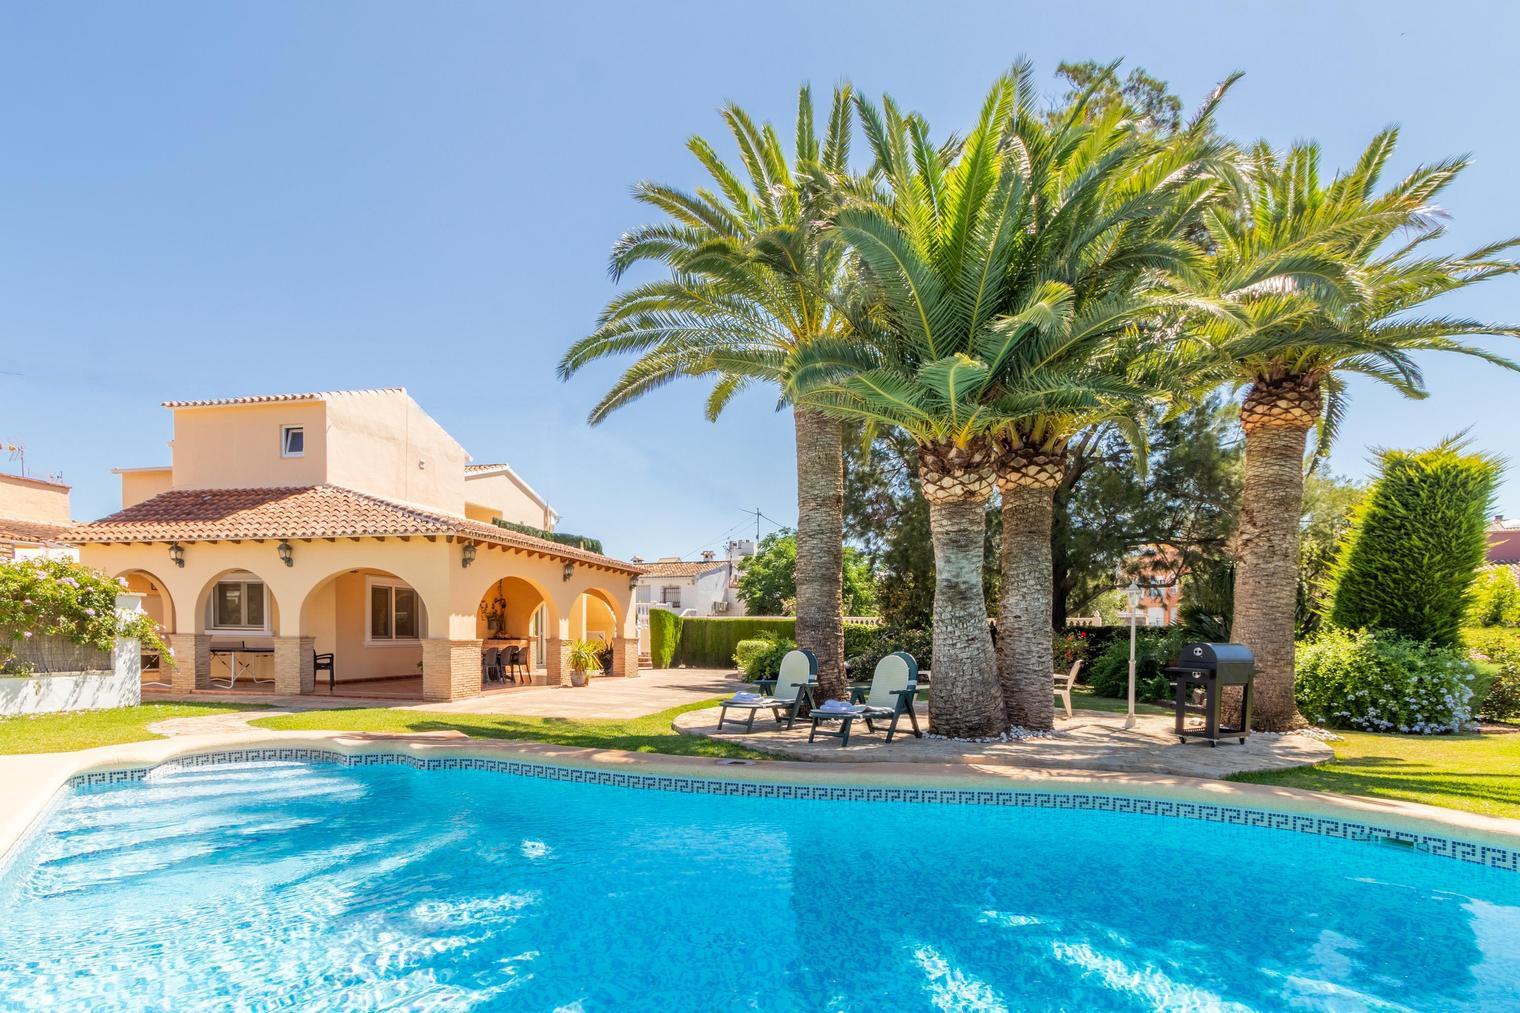 Ferienhaus in Dénia mit Privatem Pool  in Spanien